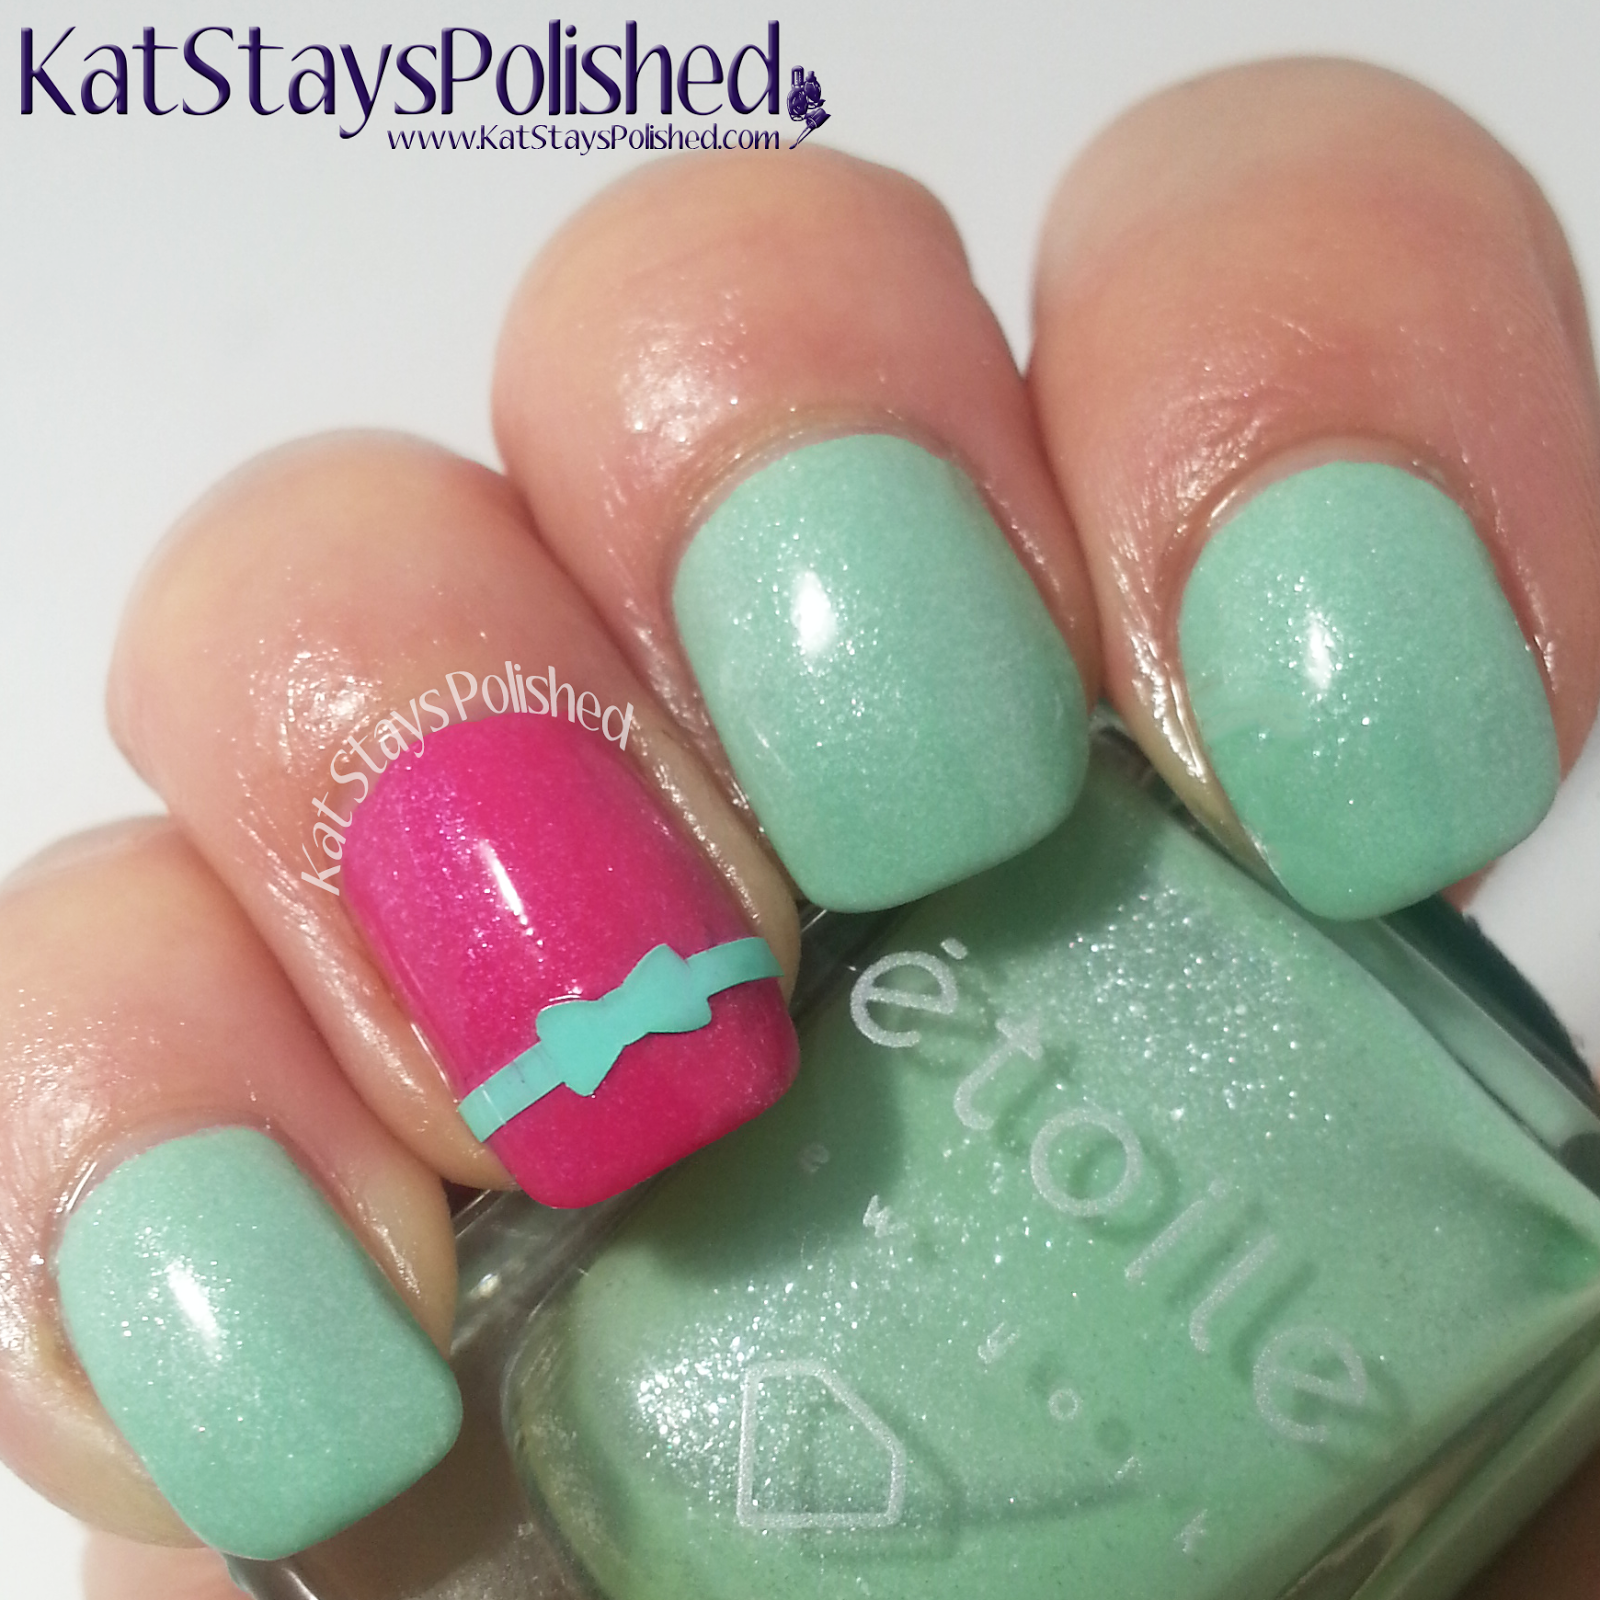 You Polish Nail Decals | étoile nail polish Greenwich St. Soirée - Fizzy Cucumber & Pink Panache | Kat Stays Polished